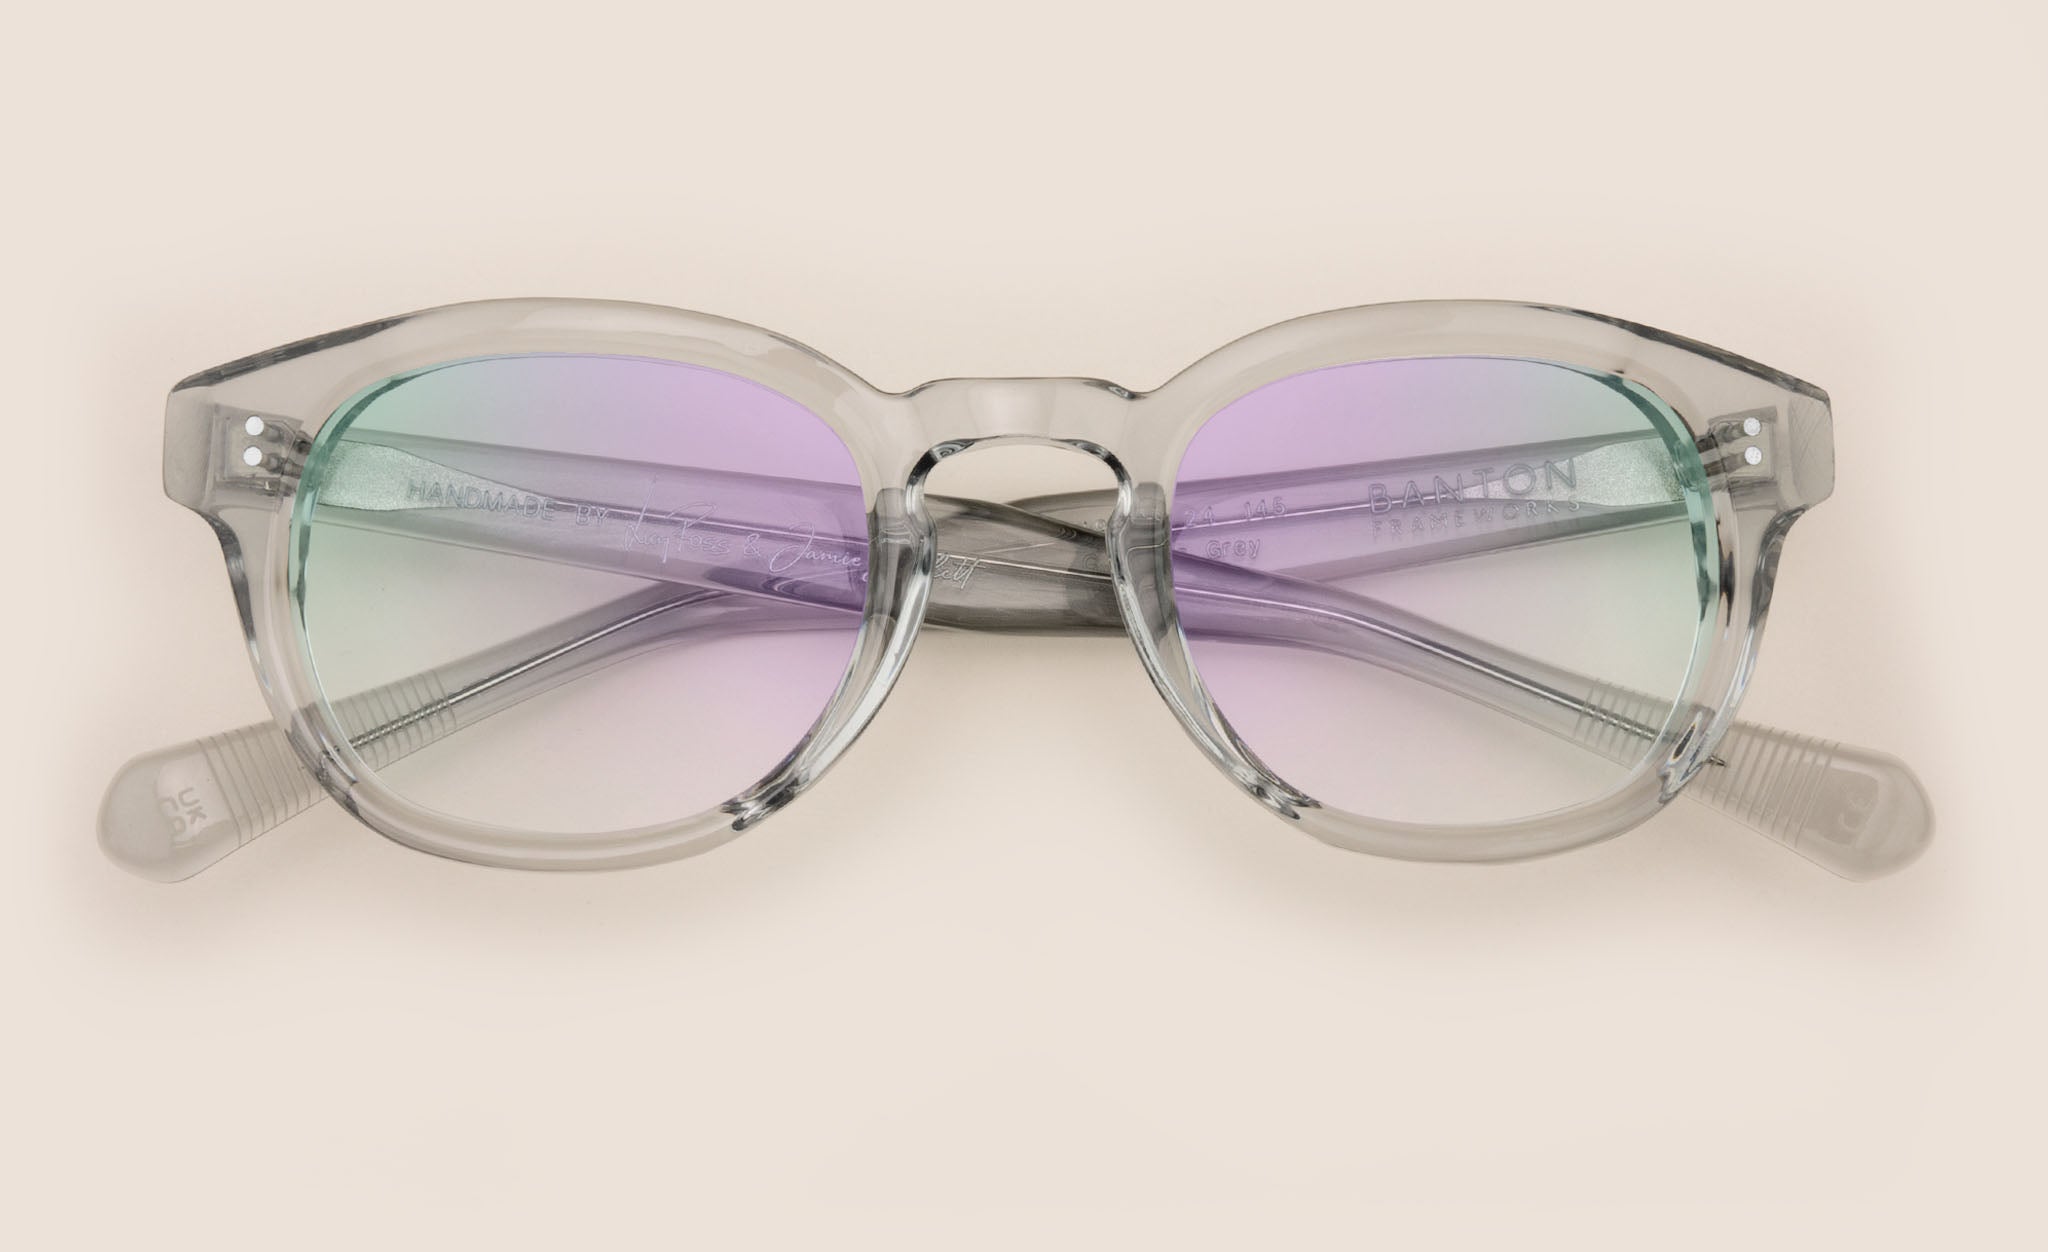 Thick clear frame oval shape eyeglasses frame